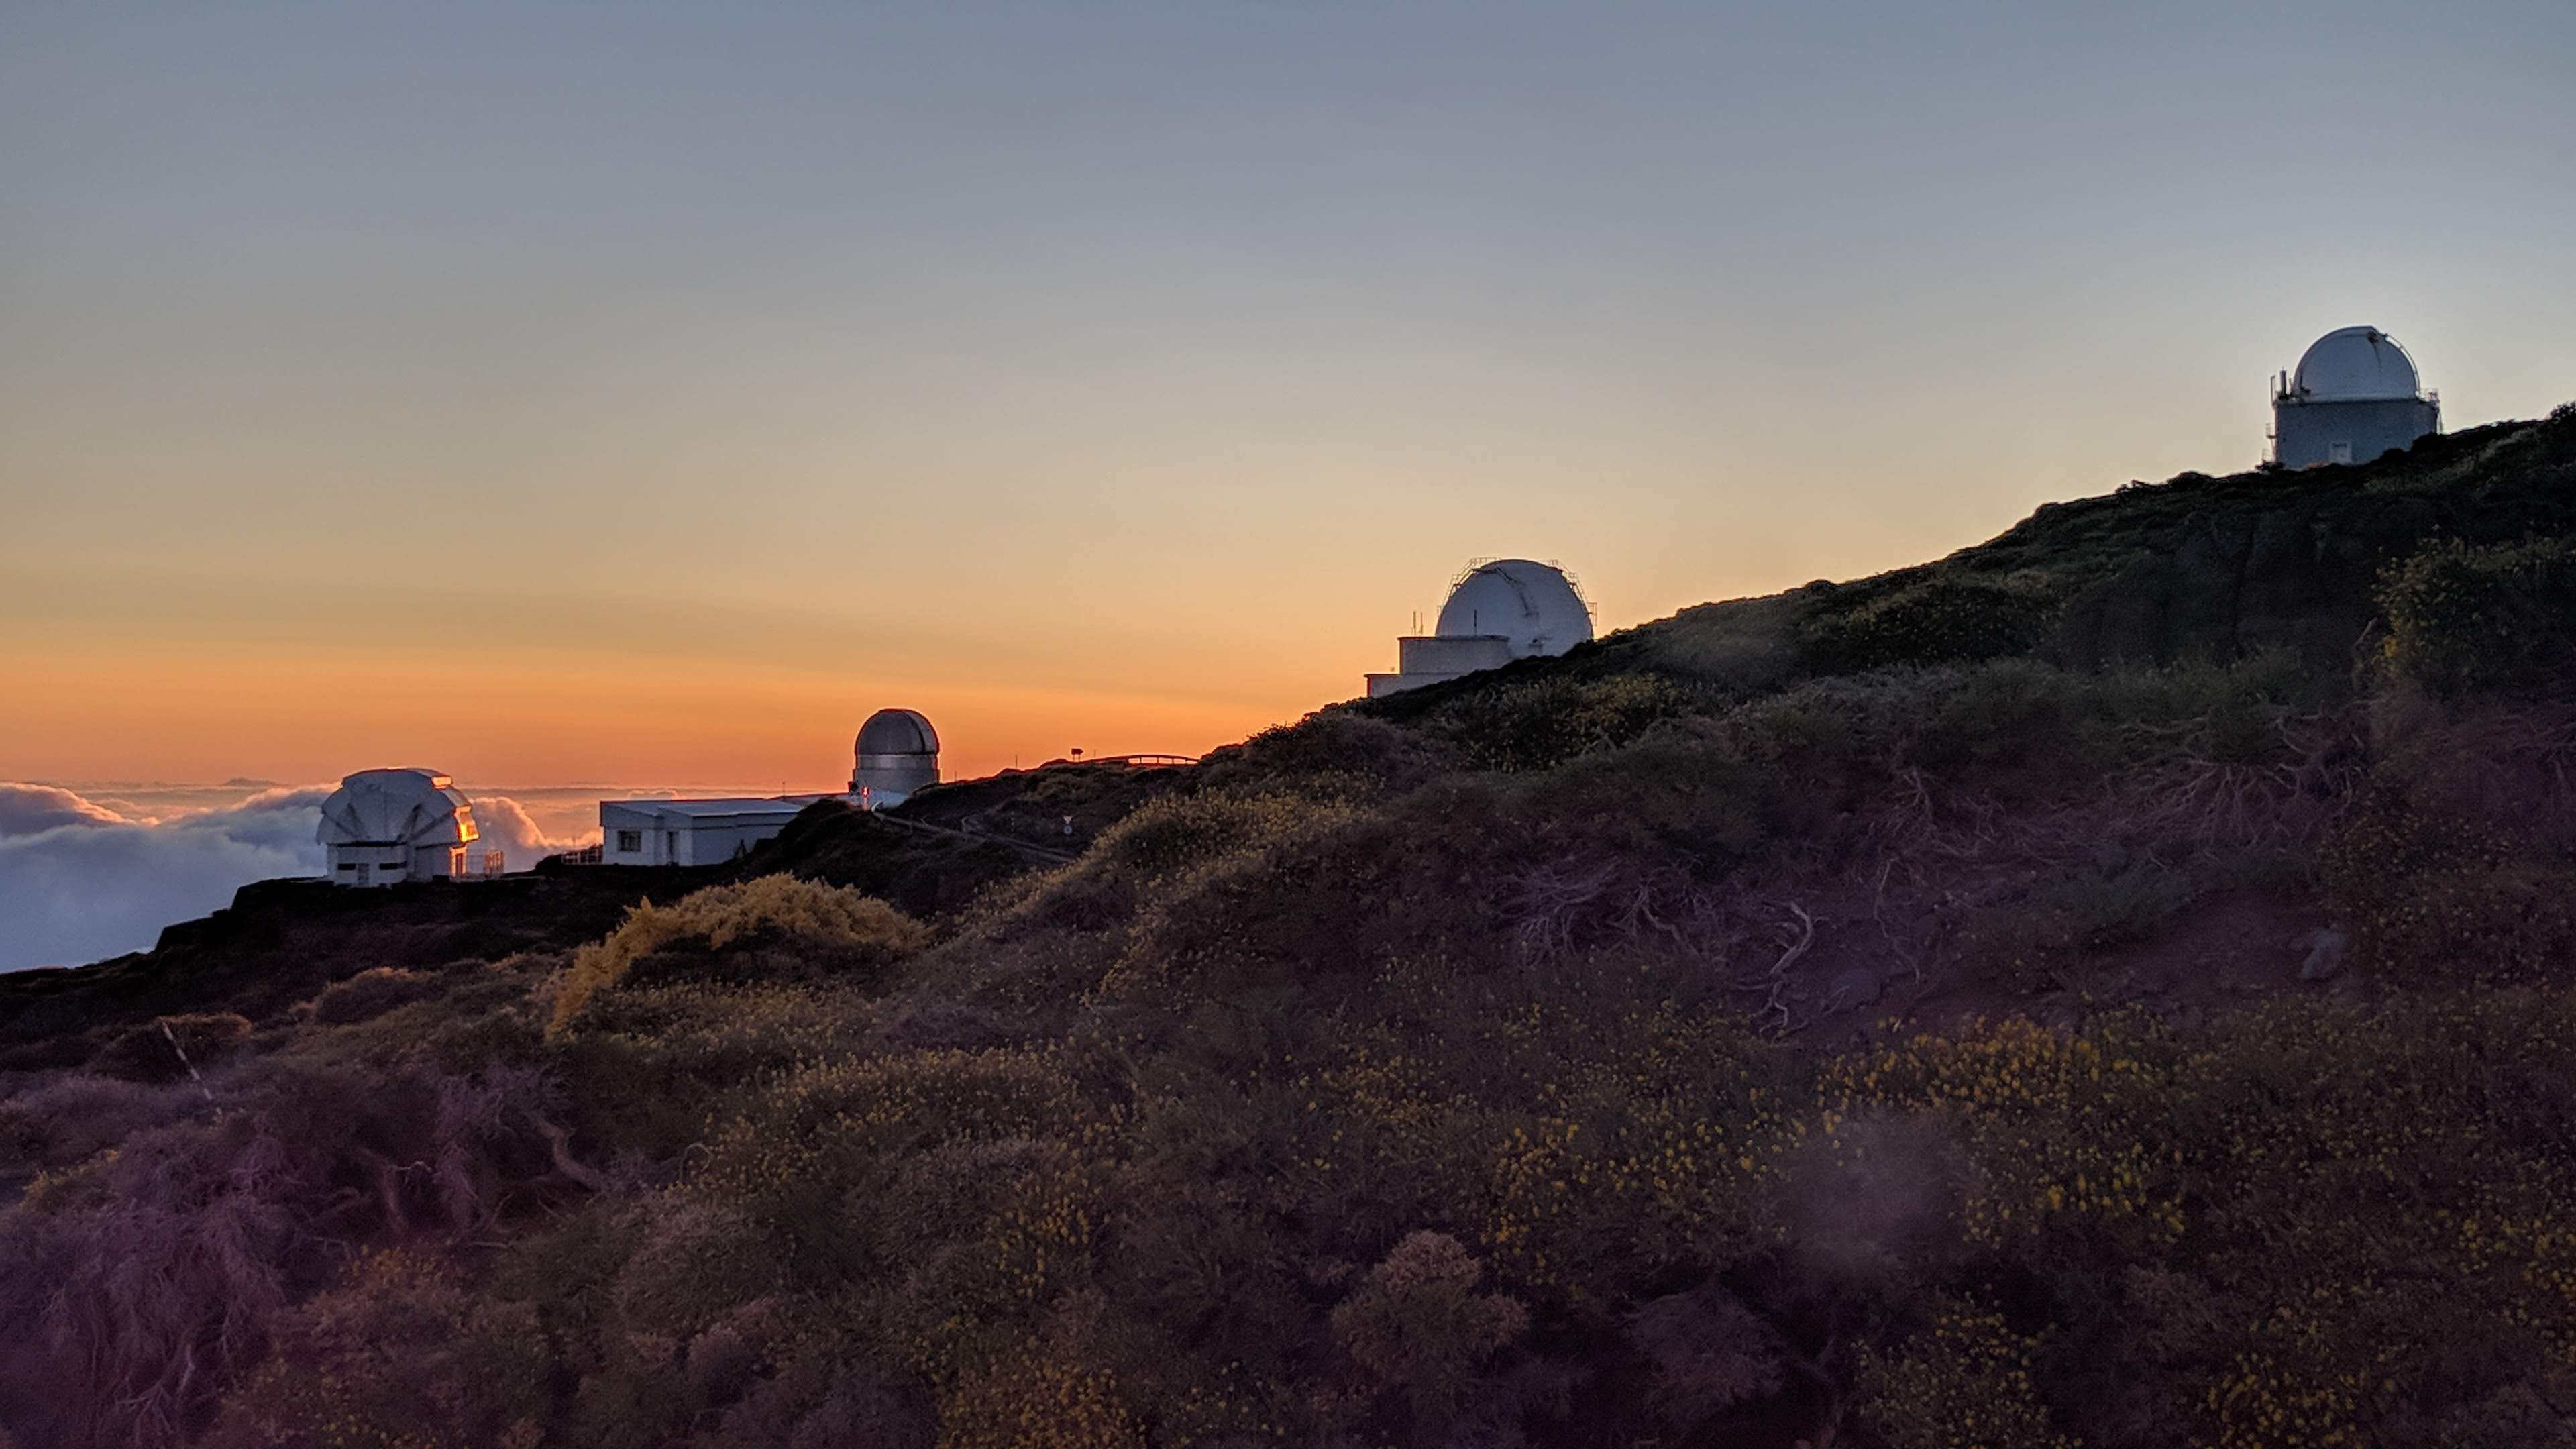 Evening sunset view of the telescopes on La Palma